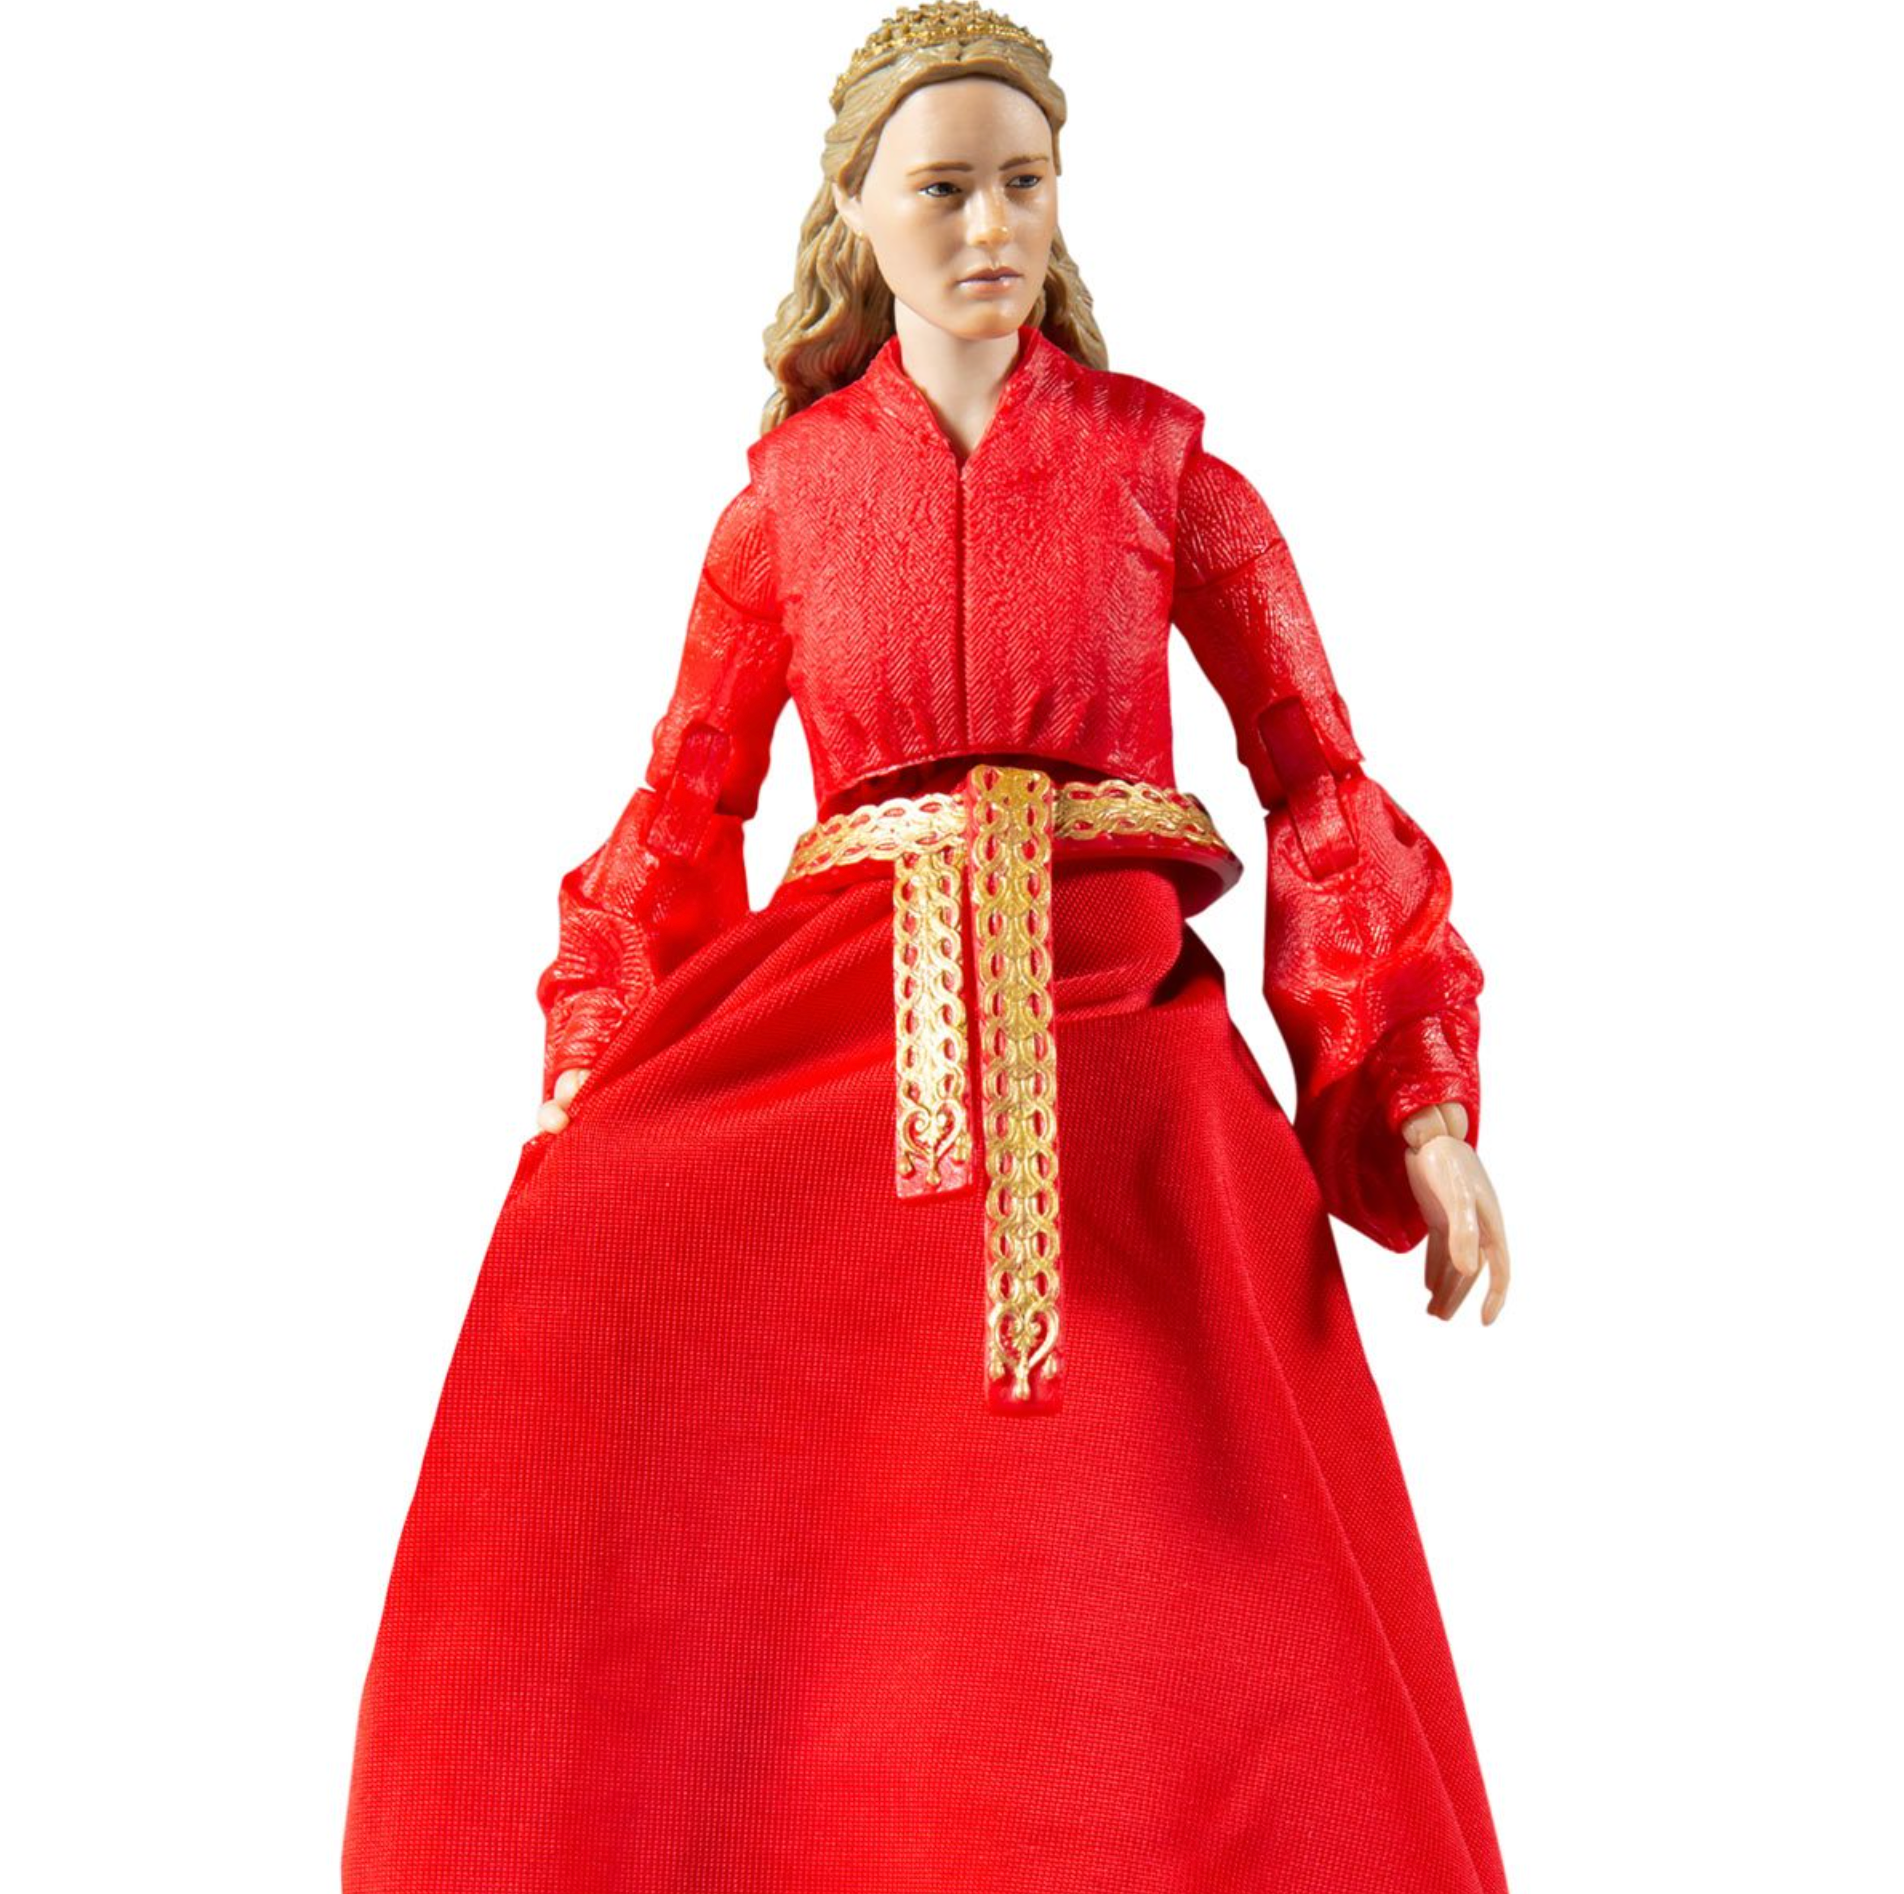 The Princess Bride's Princess Buttercup 7-Inch Action Figure (McFarlane Toys)